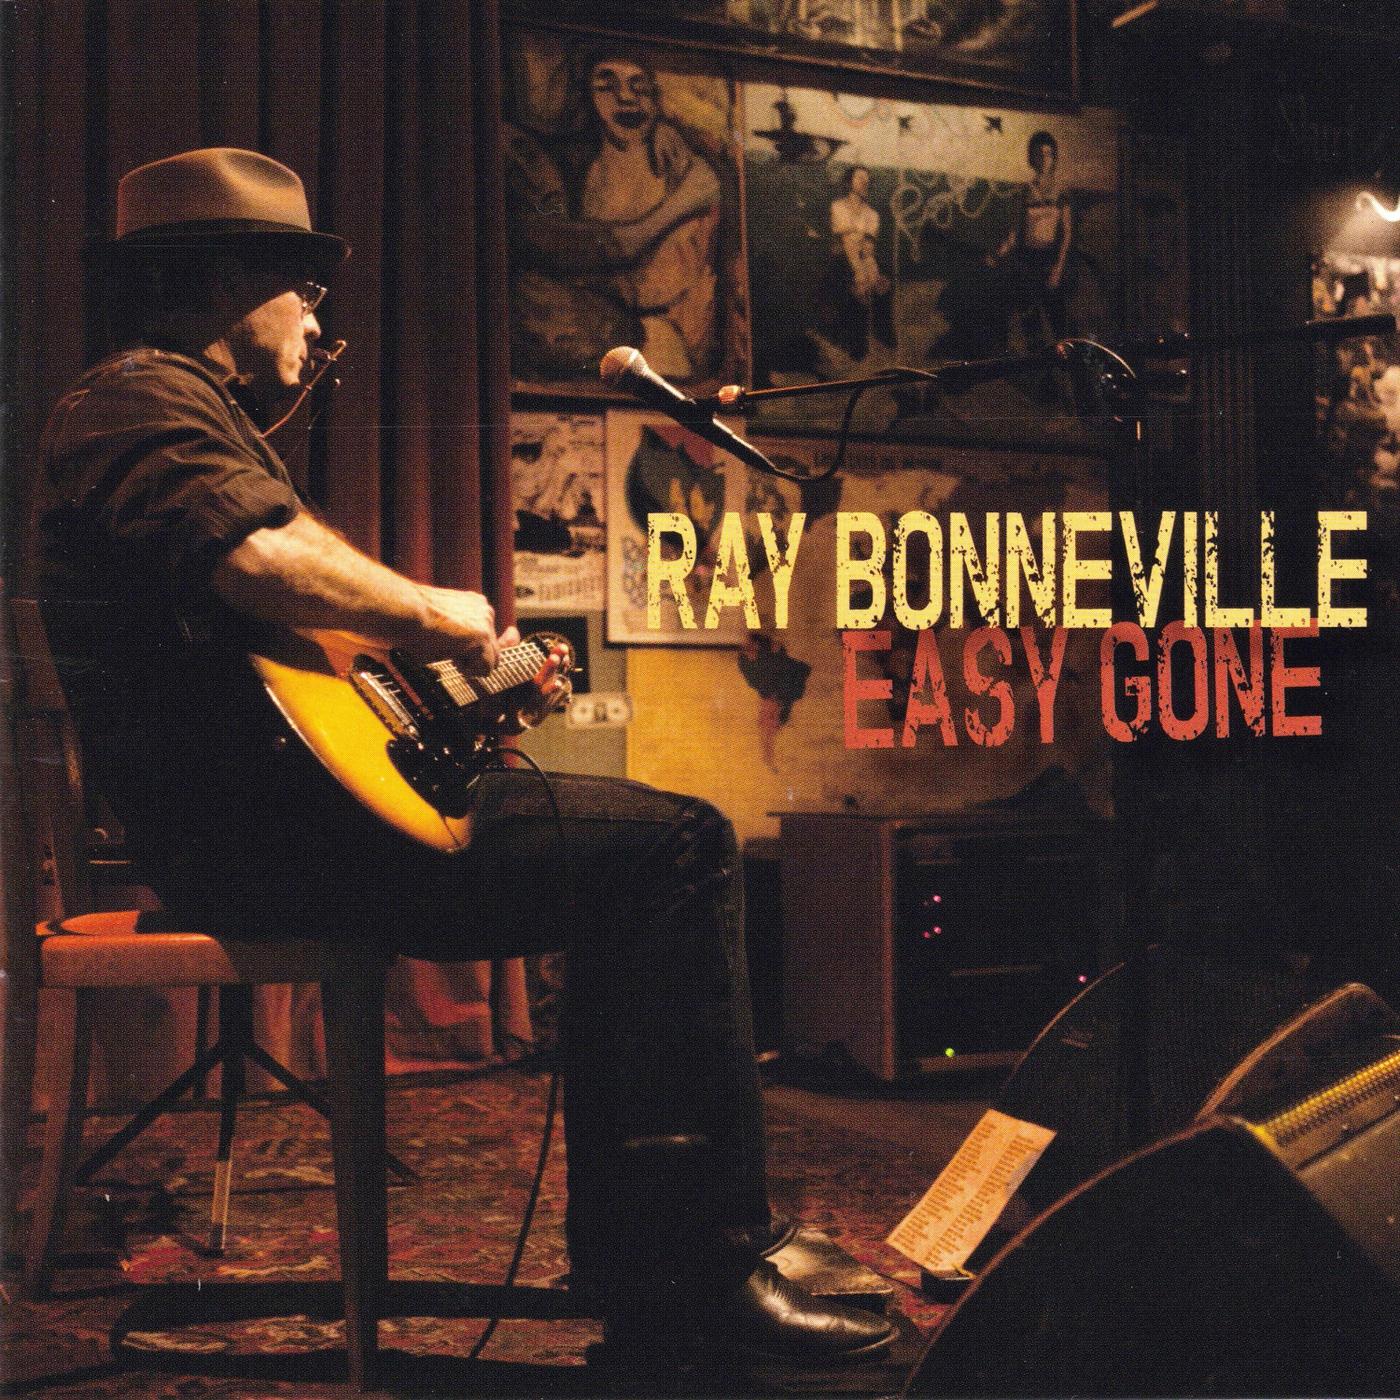 Ray Bonneville - Mile Marker 41